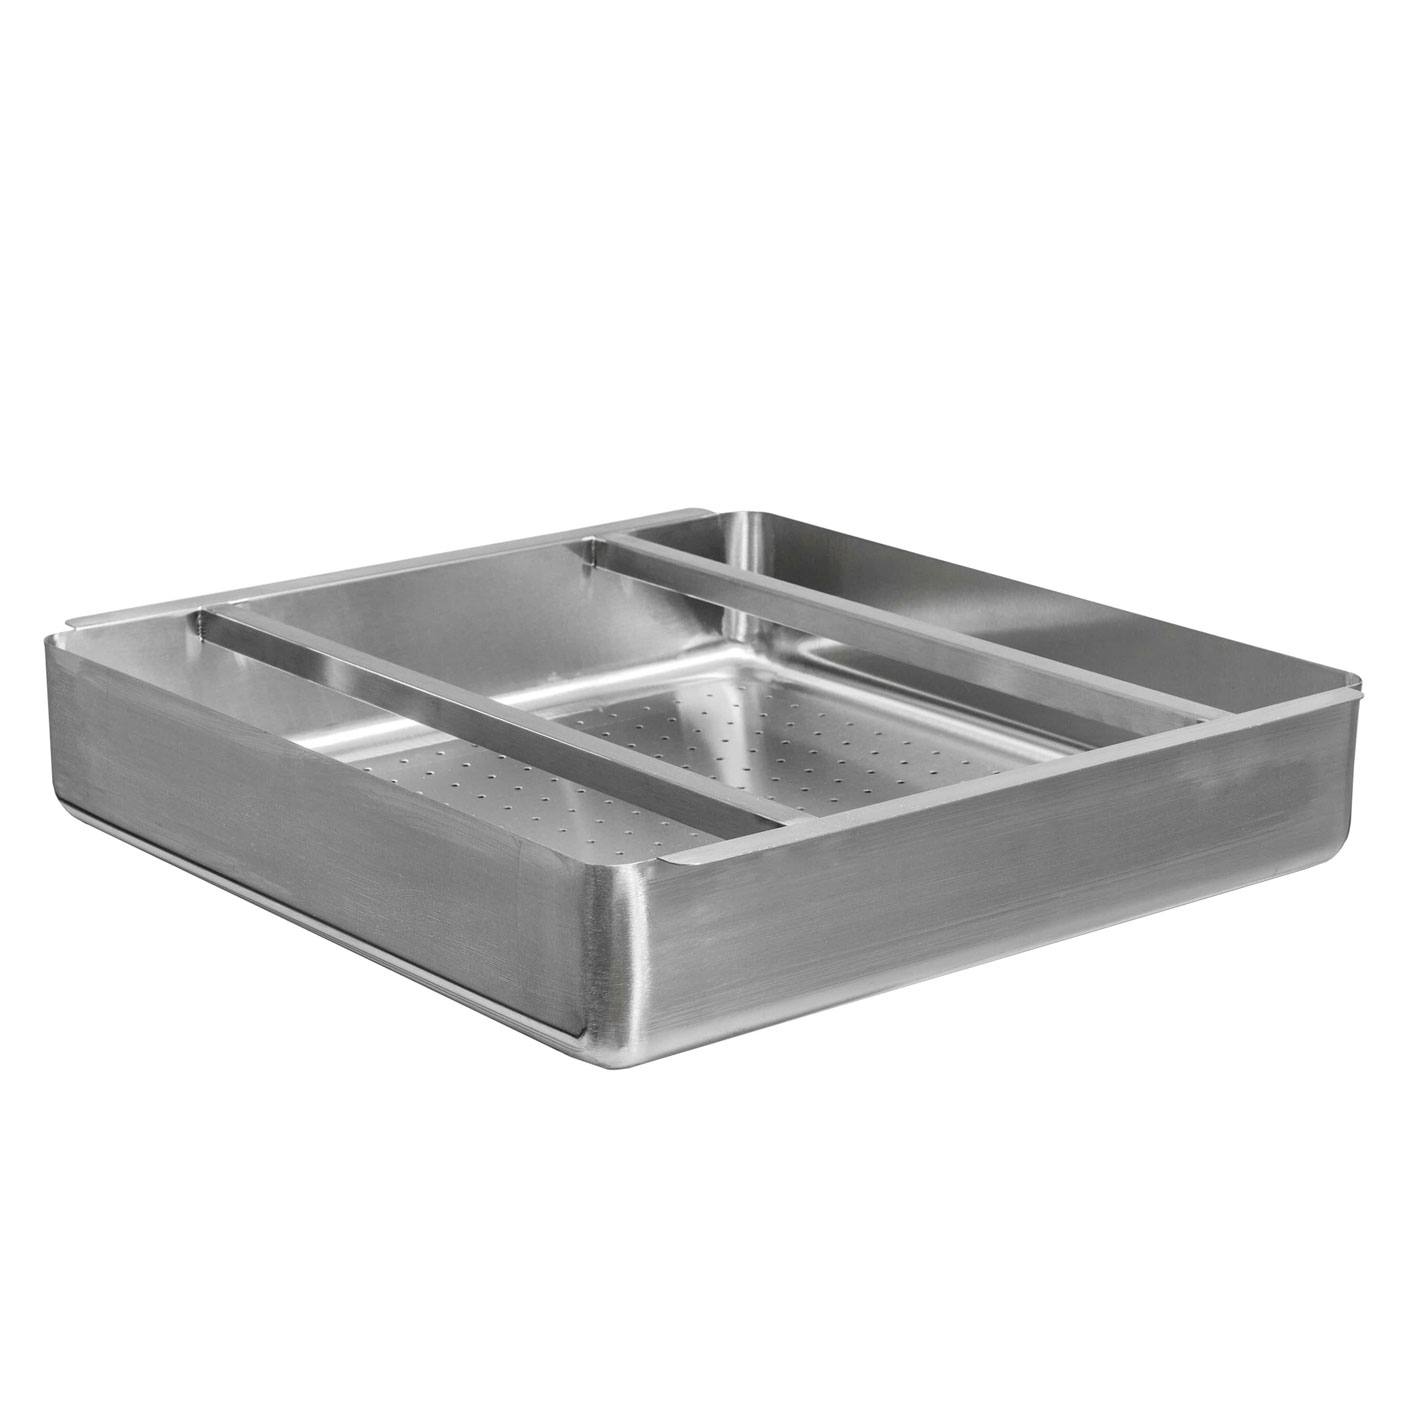 Thorinox  
TSDT-BASKET  
Pre Rinse Sink Basket, 20" x 20" x 4", stainless steel